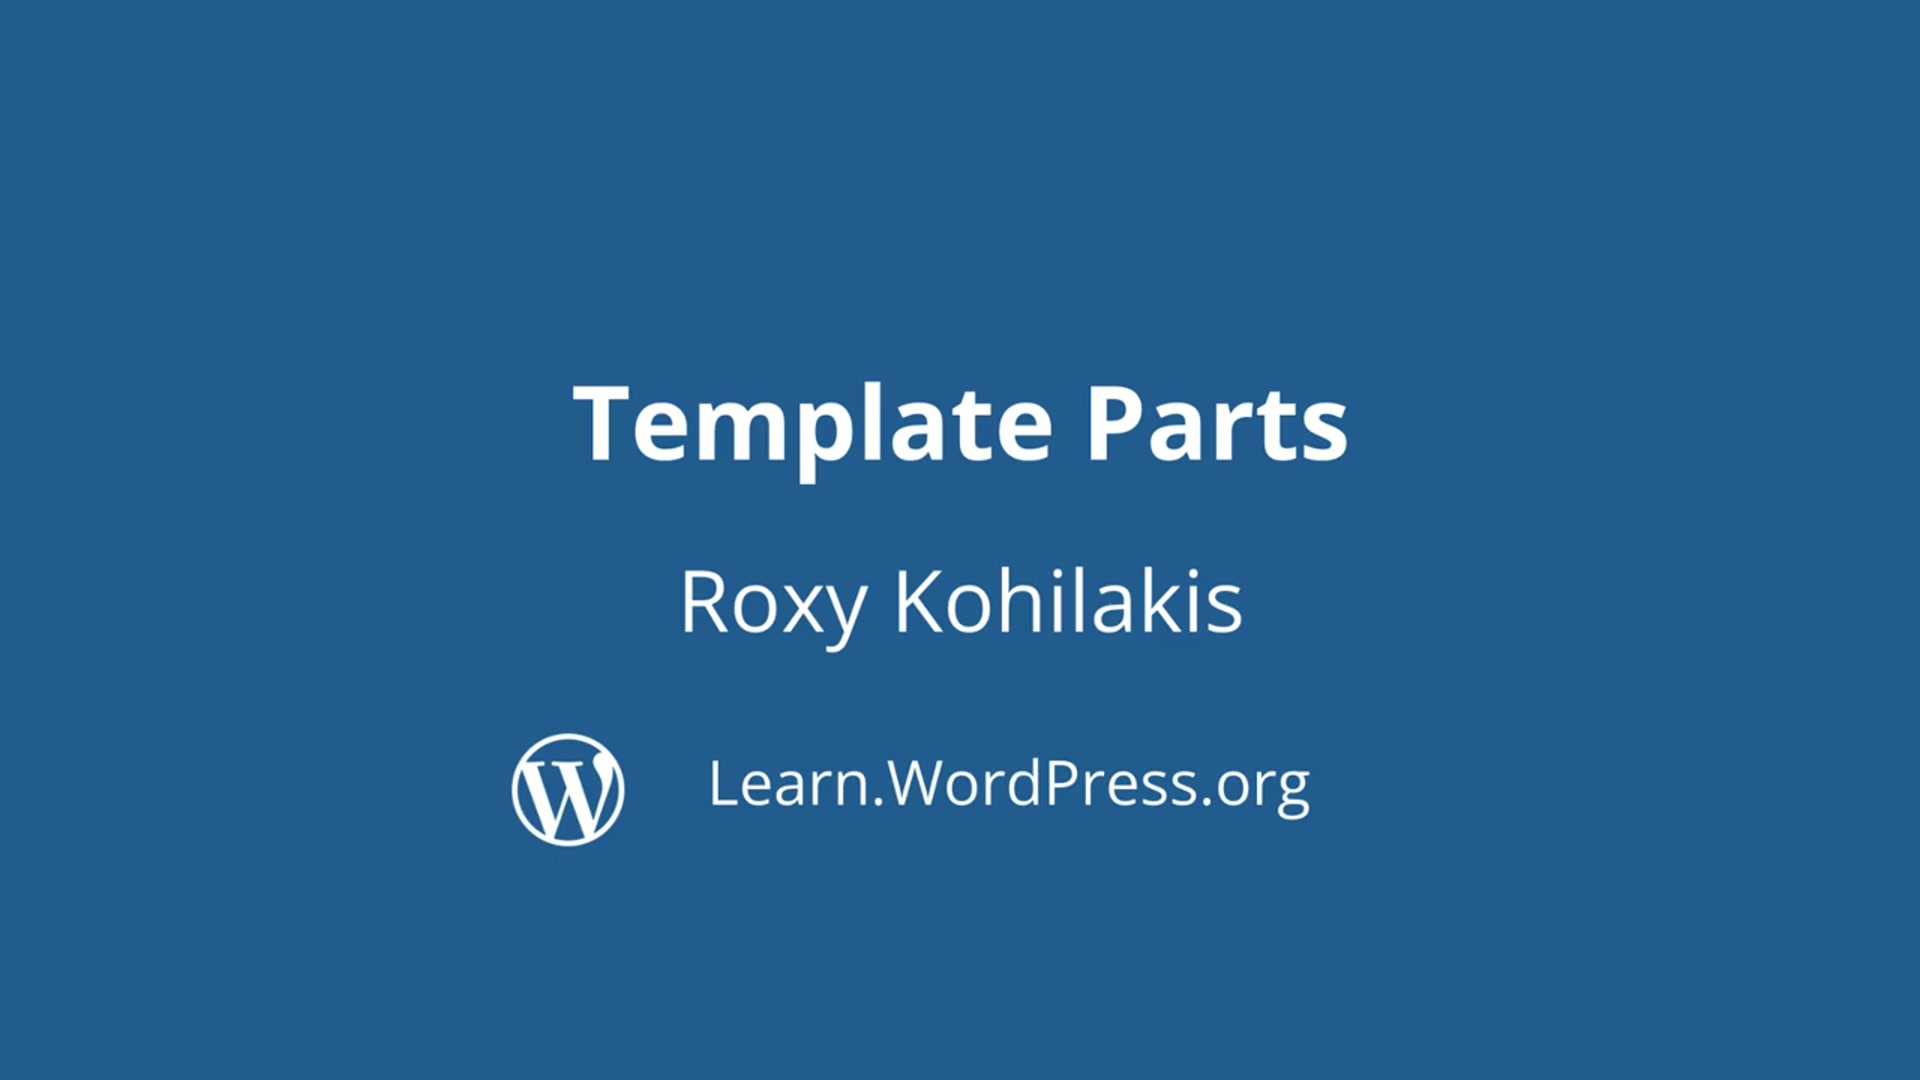 Roxy Kohilakis: Template Parts